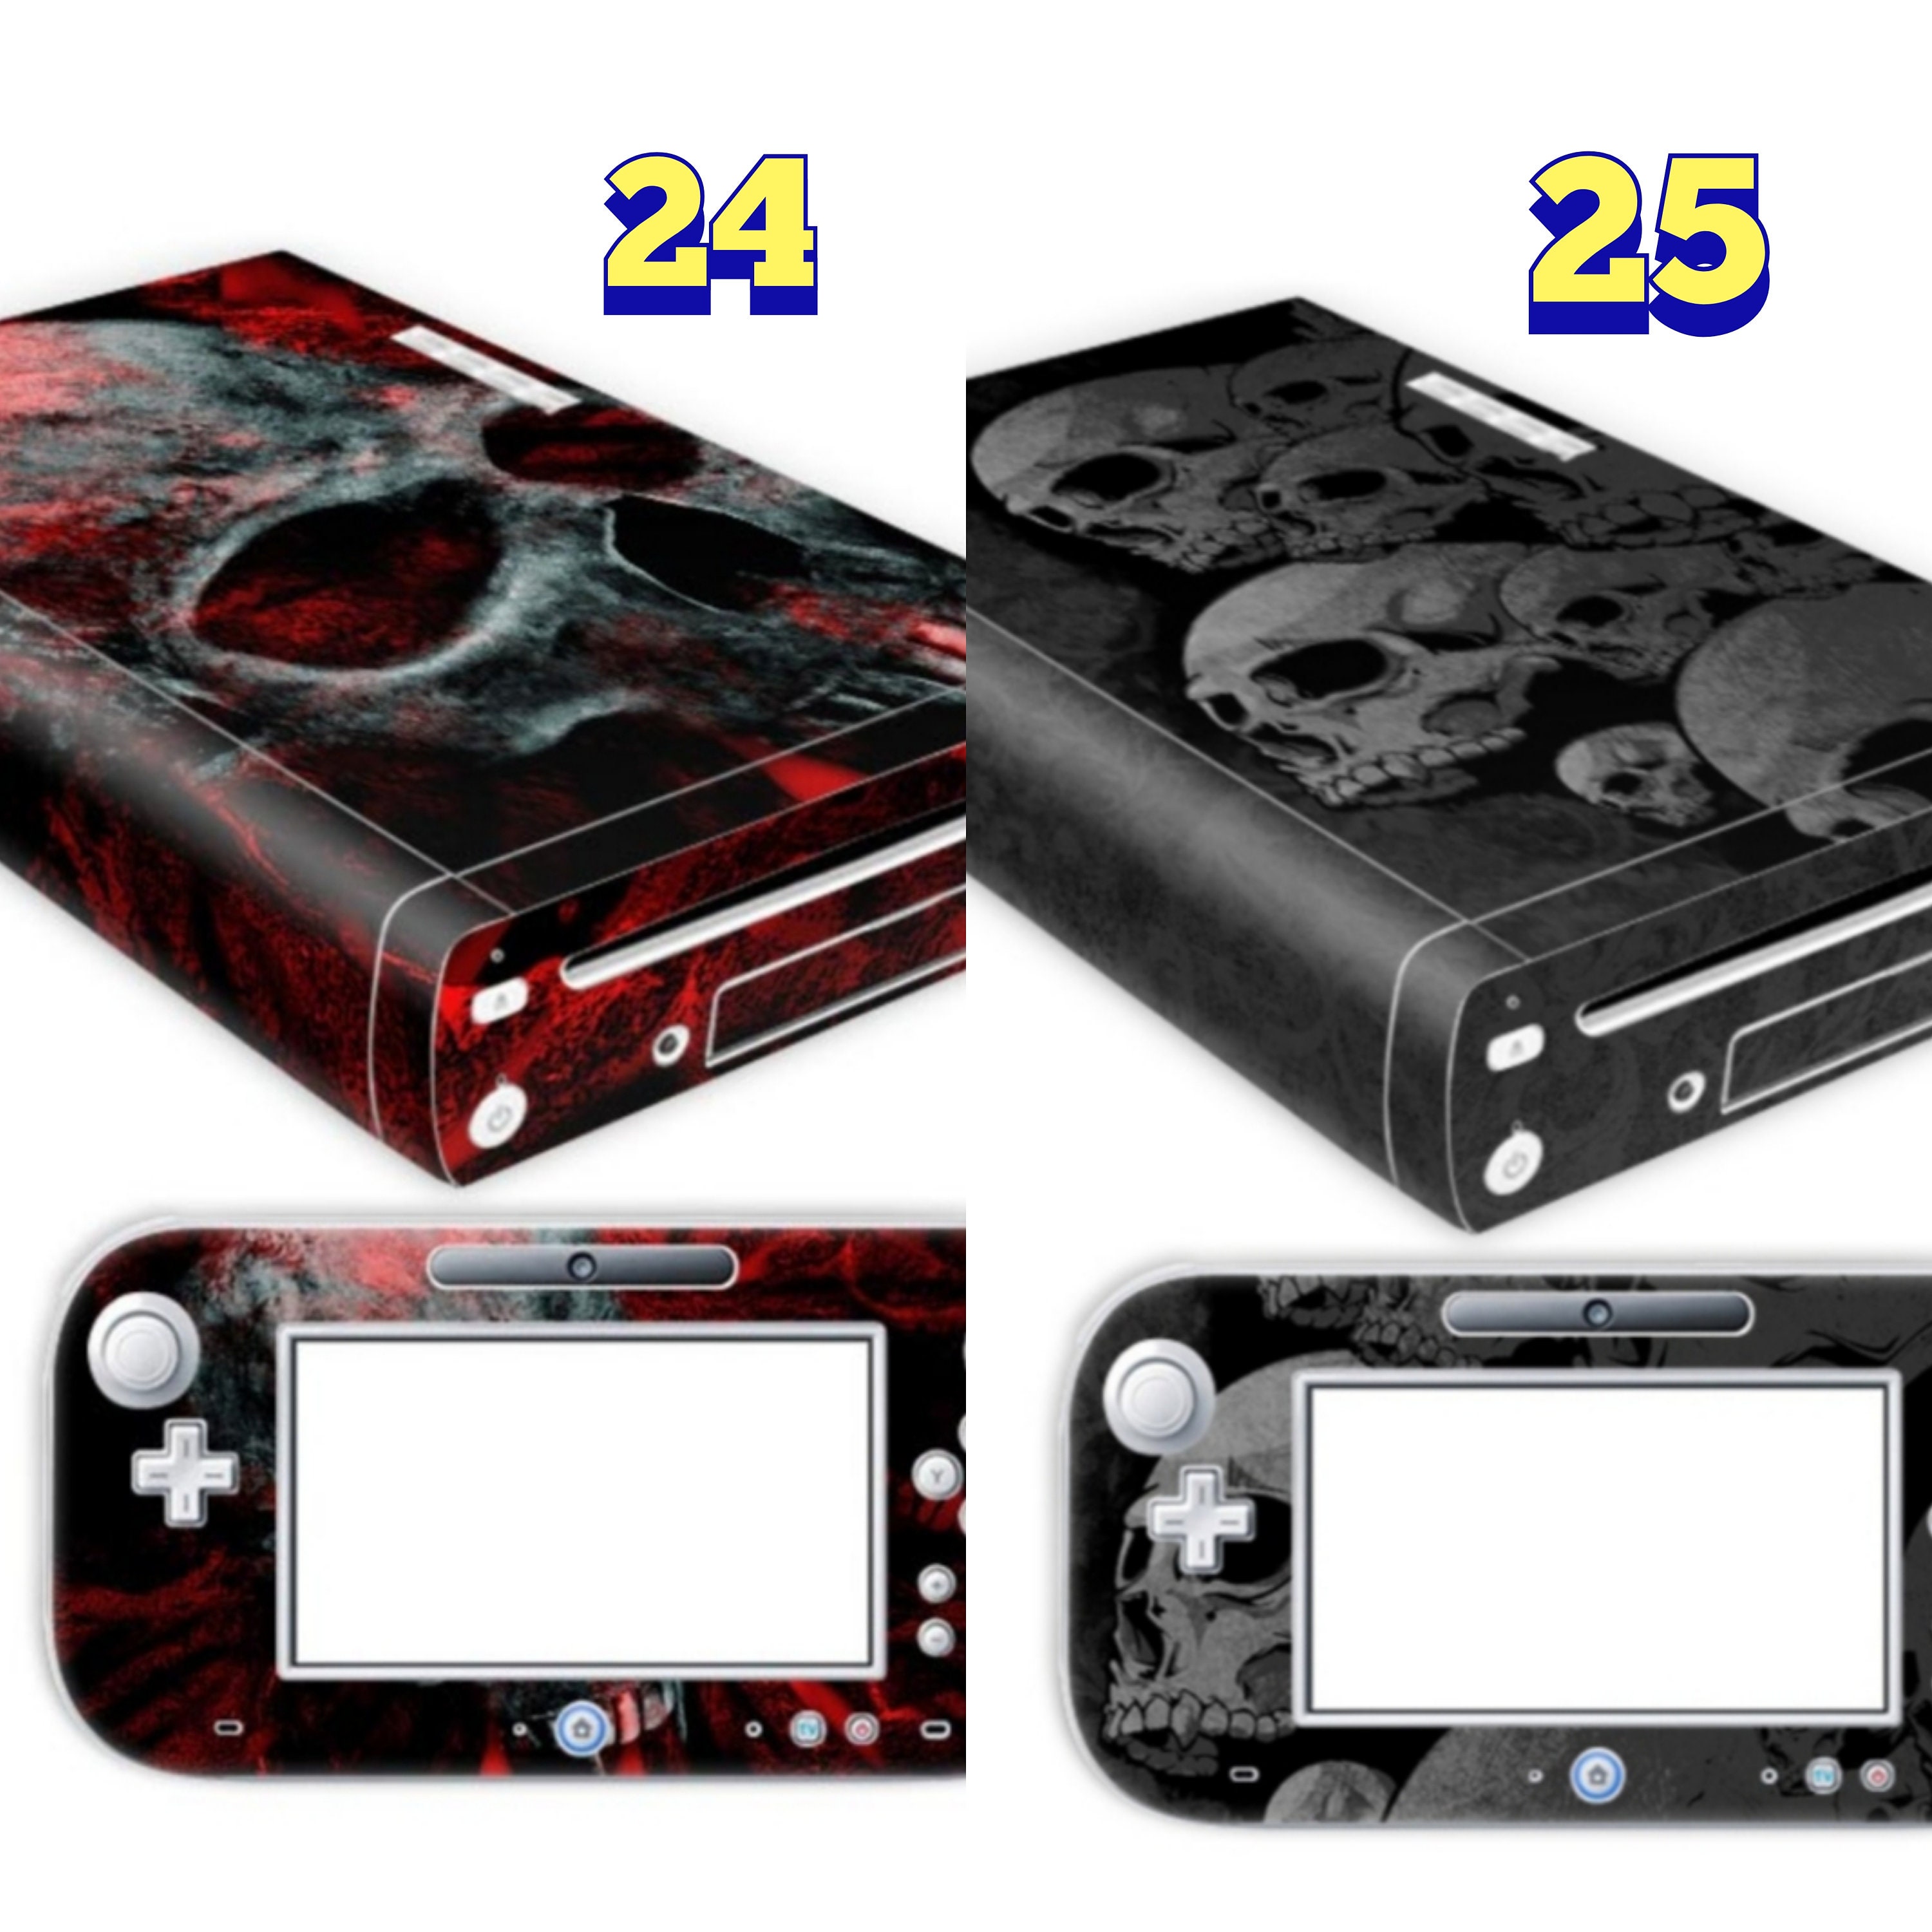 Nintendo Wii U Console (Black) (32GB) Smash/Splat Deluxe Set Boxed